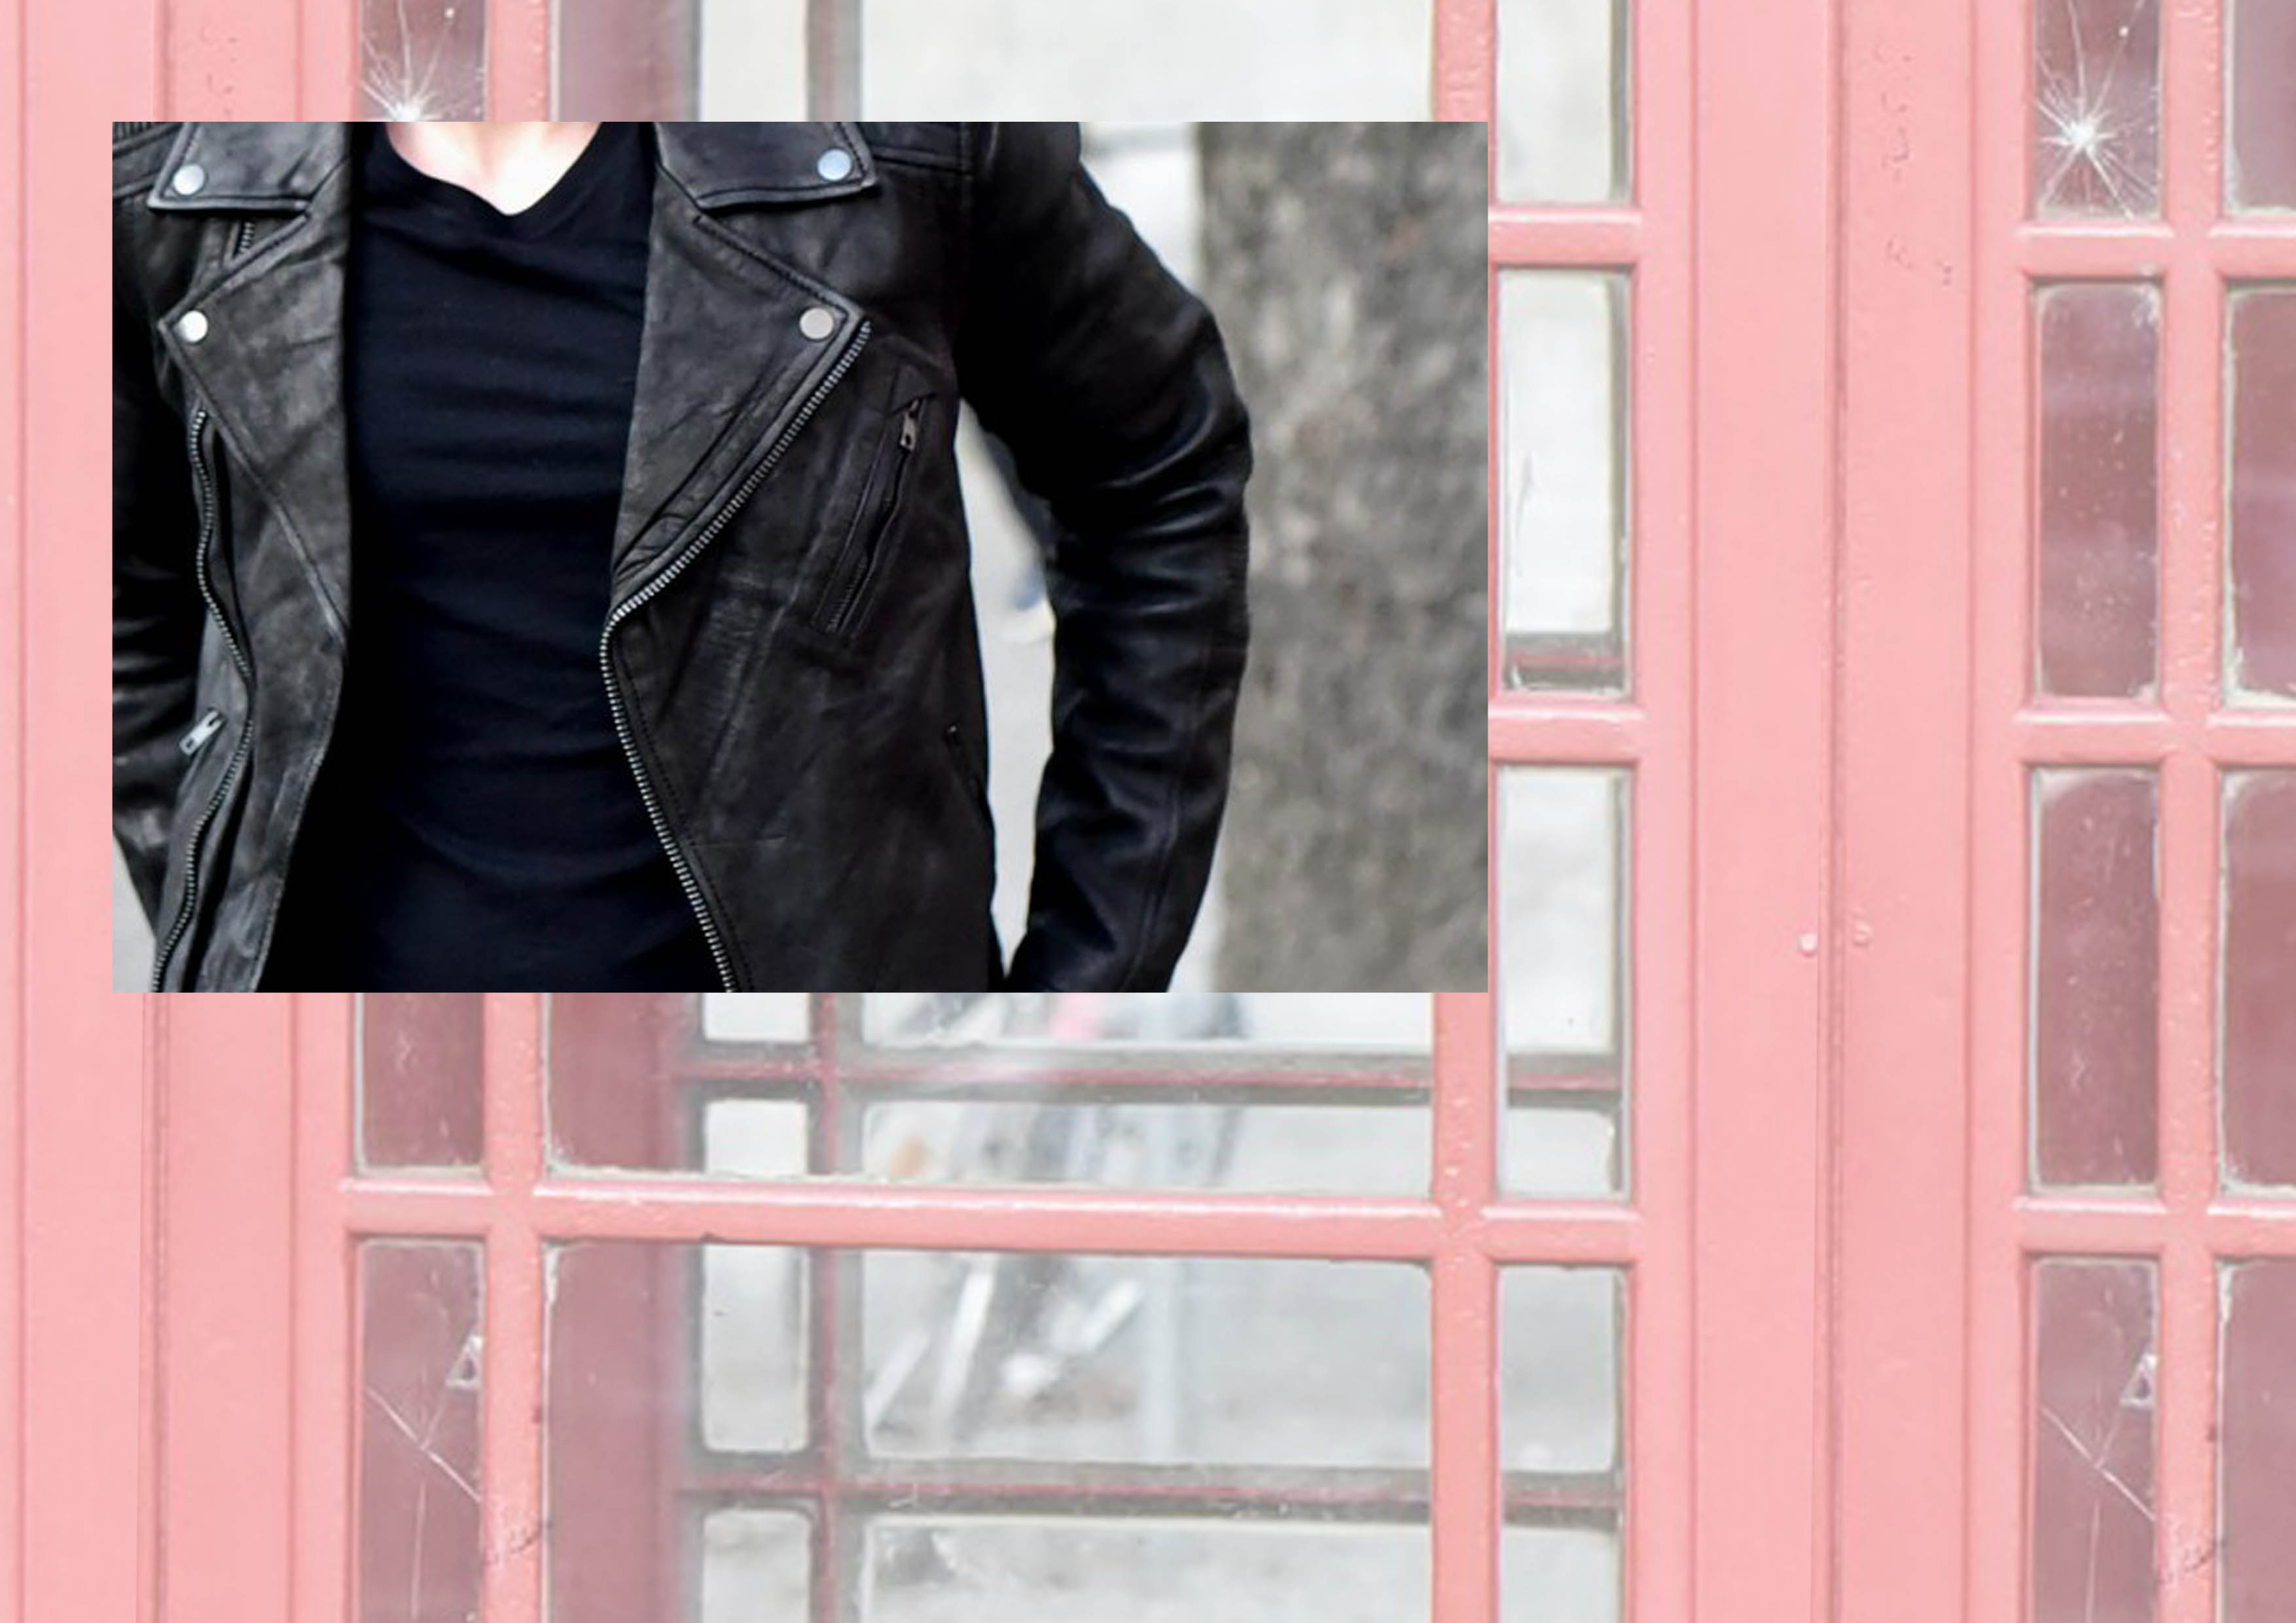 Gabba Denim Fashion Streetstyle Streetshoot Lederjacke Black Denim Jeans Influencer